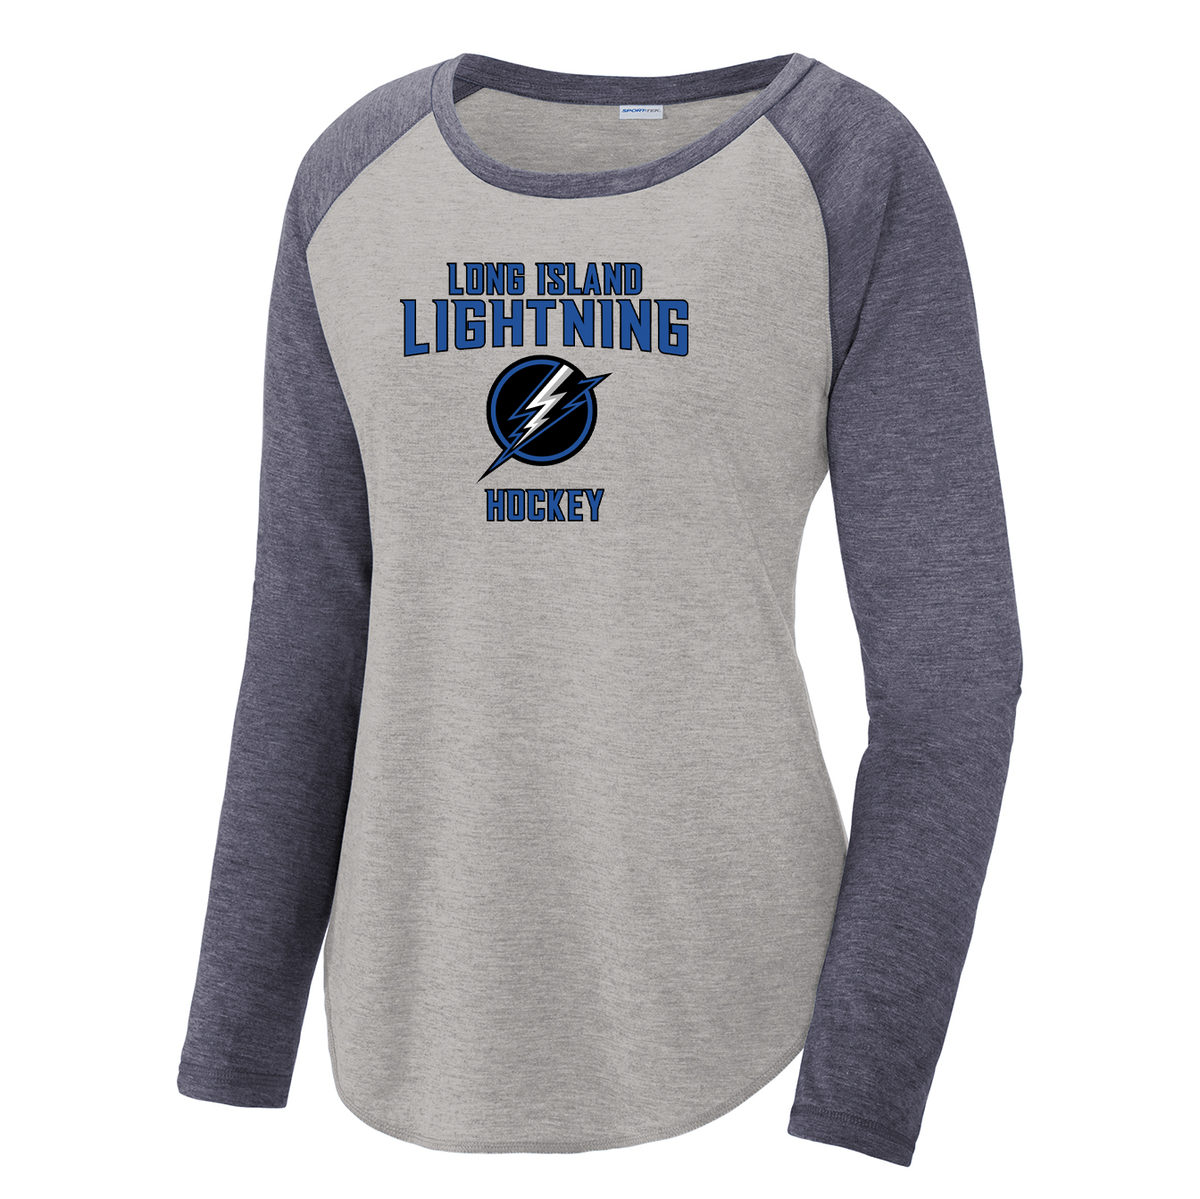 Long Island Lightning Hockey Women's Raglan Long Sleeve CottonTouch